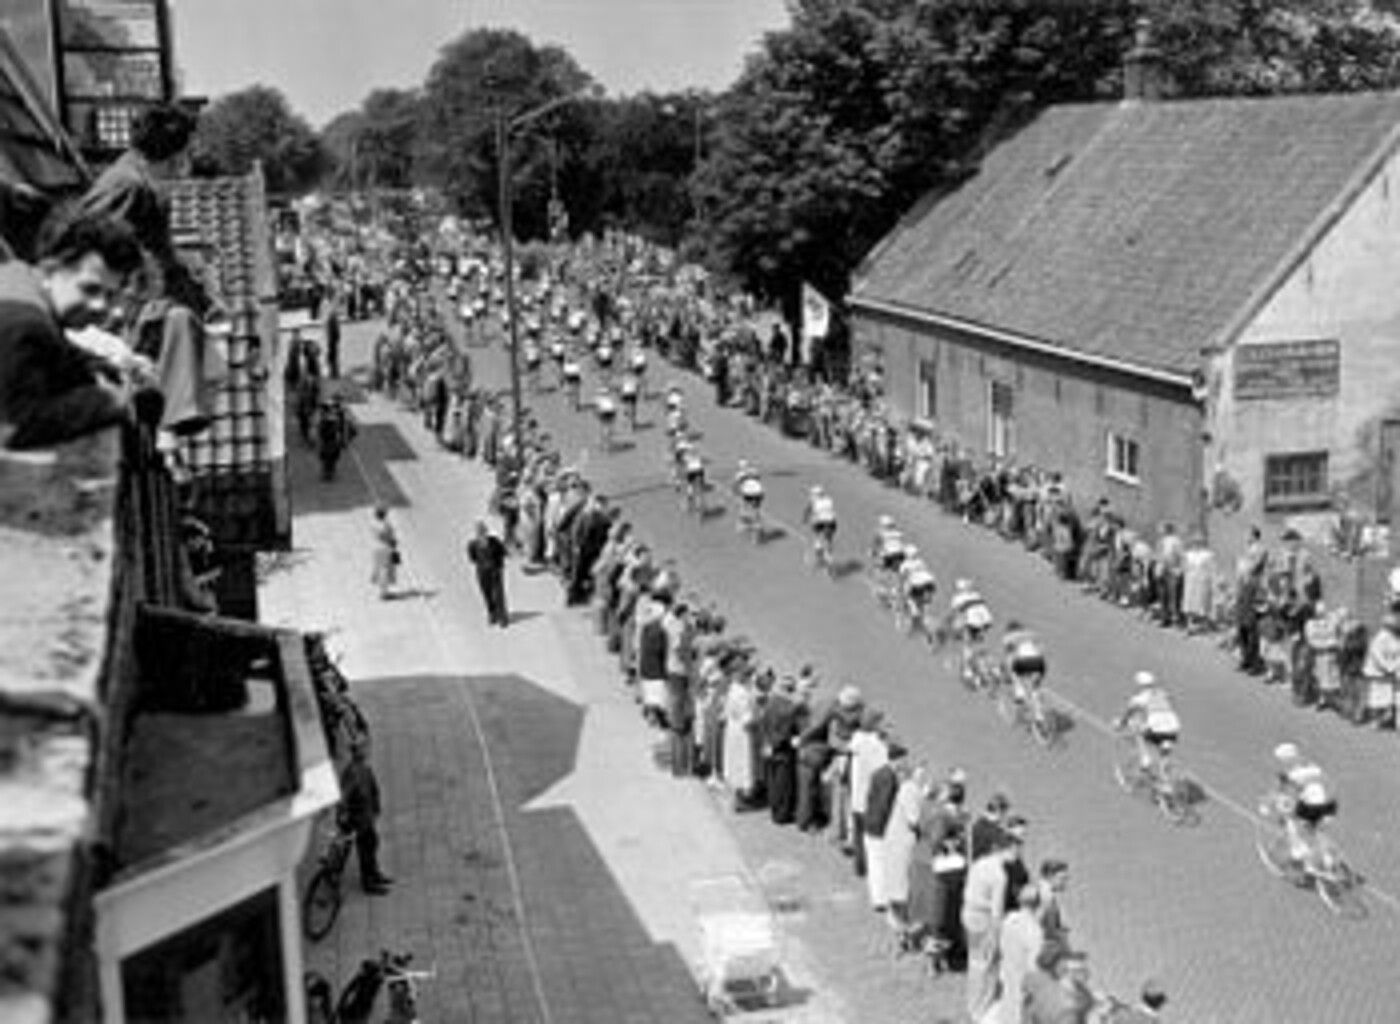 De Tour de France van 1954, 11.24 - De Tour van 1954